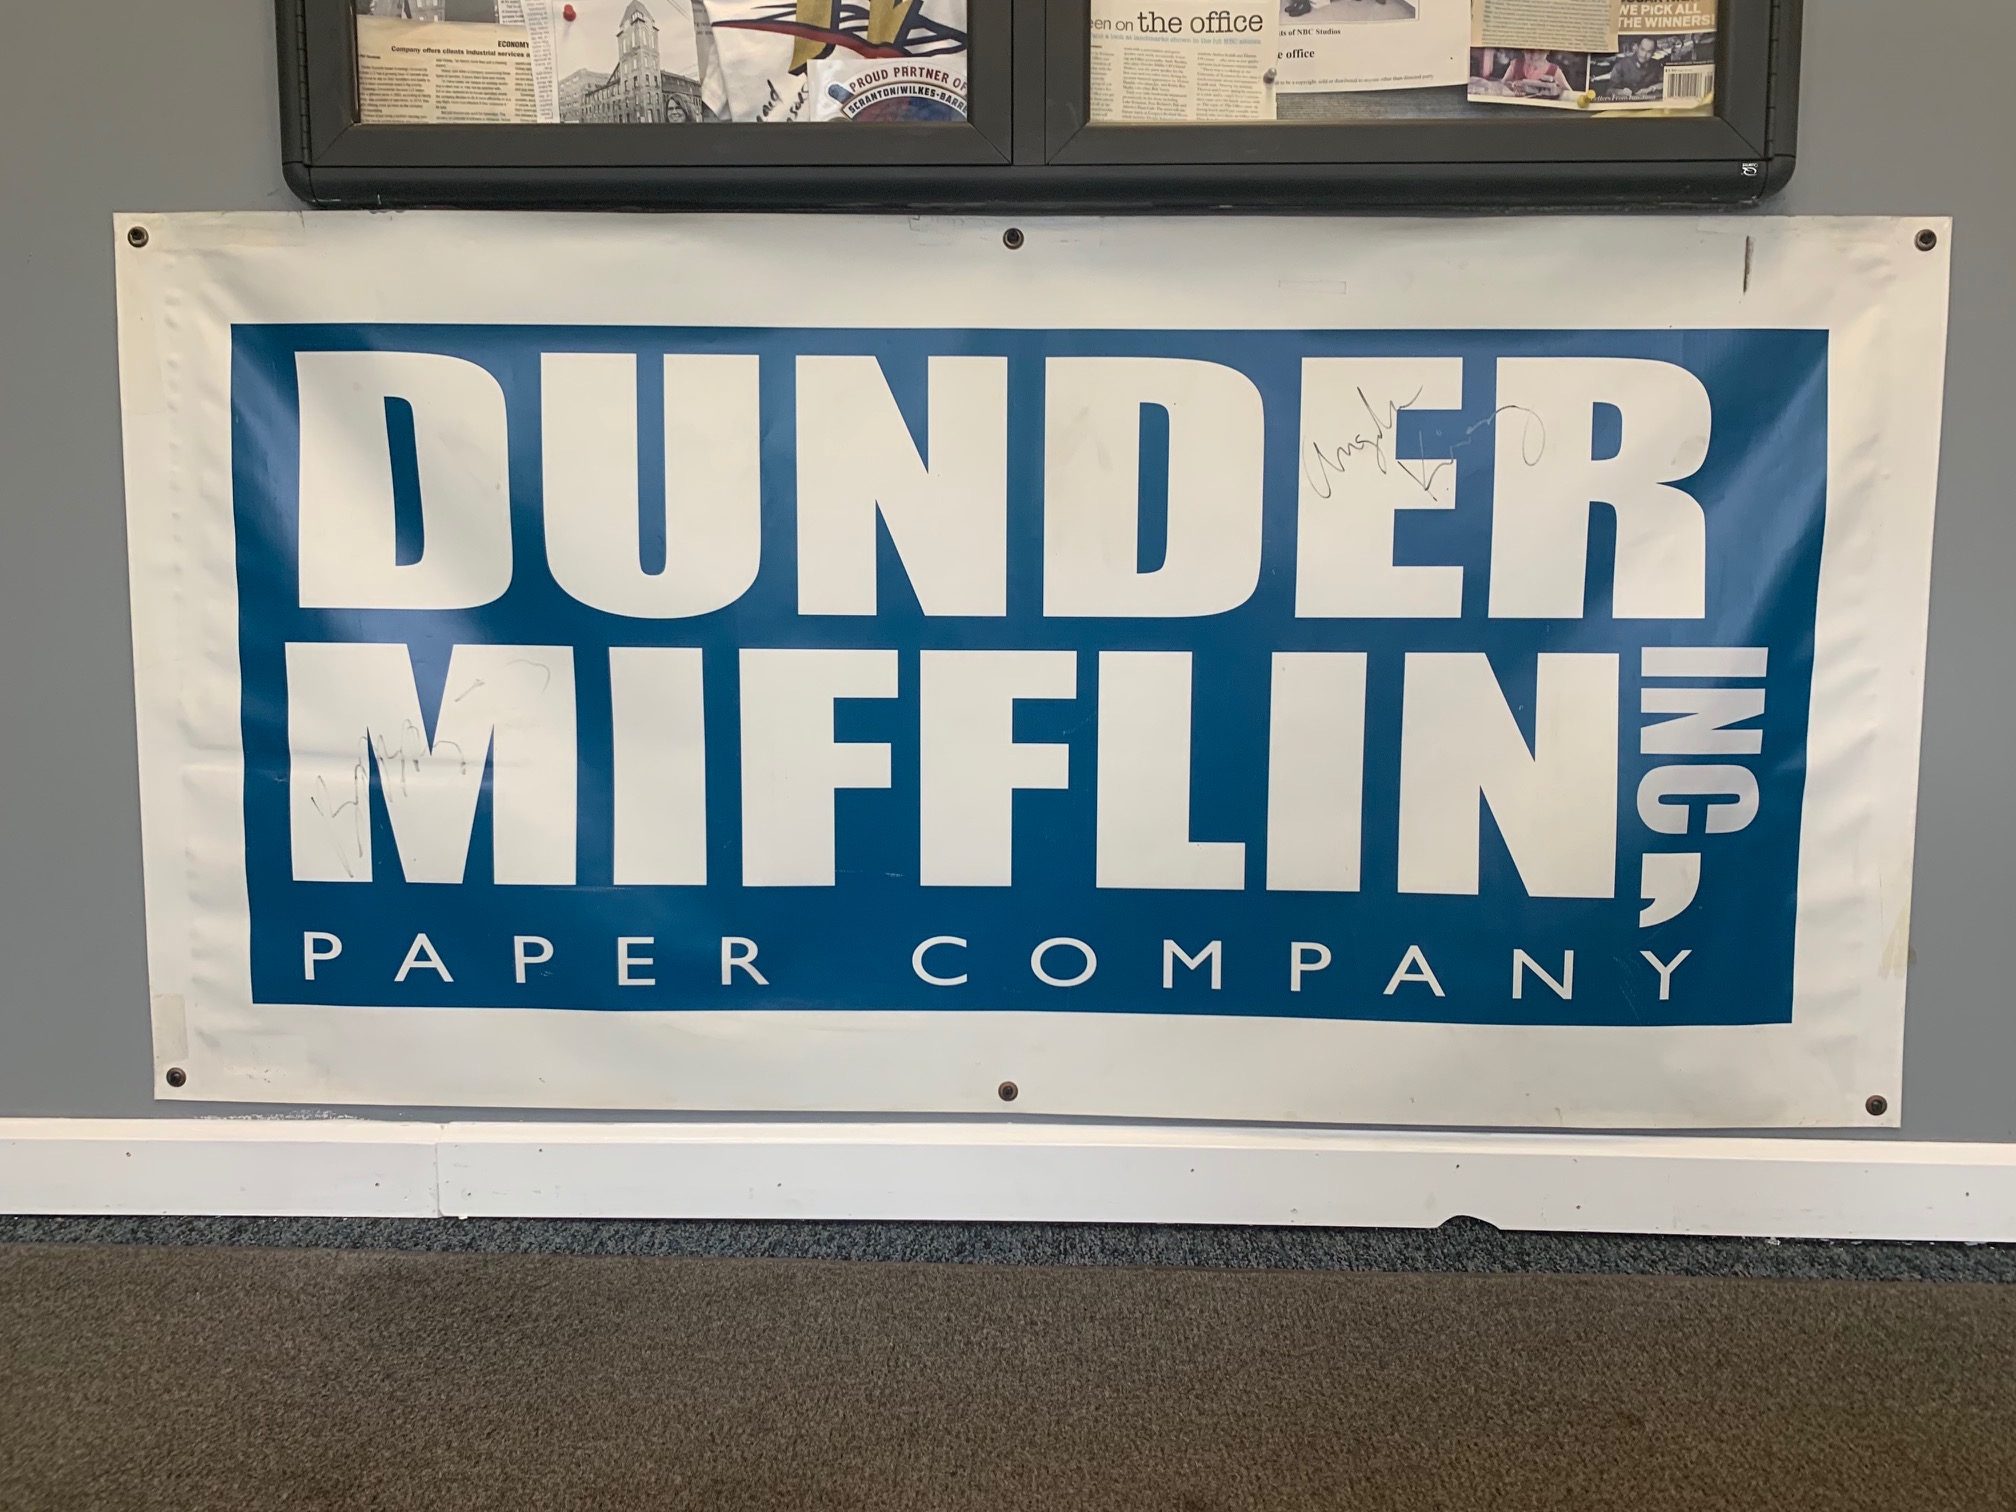 File:Dunder mifflin banner scranton.jpg - Wikipedia